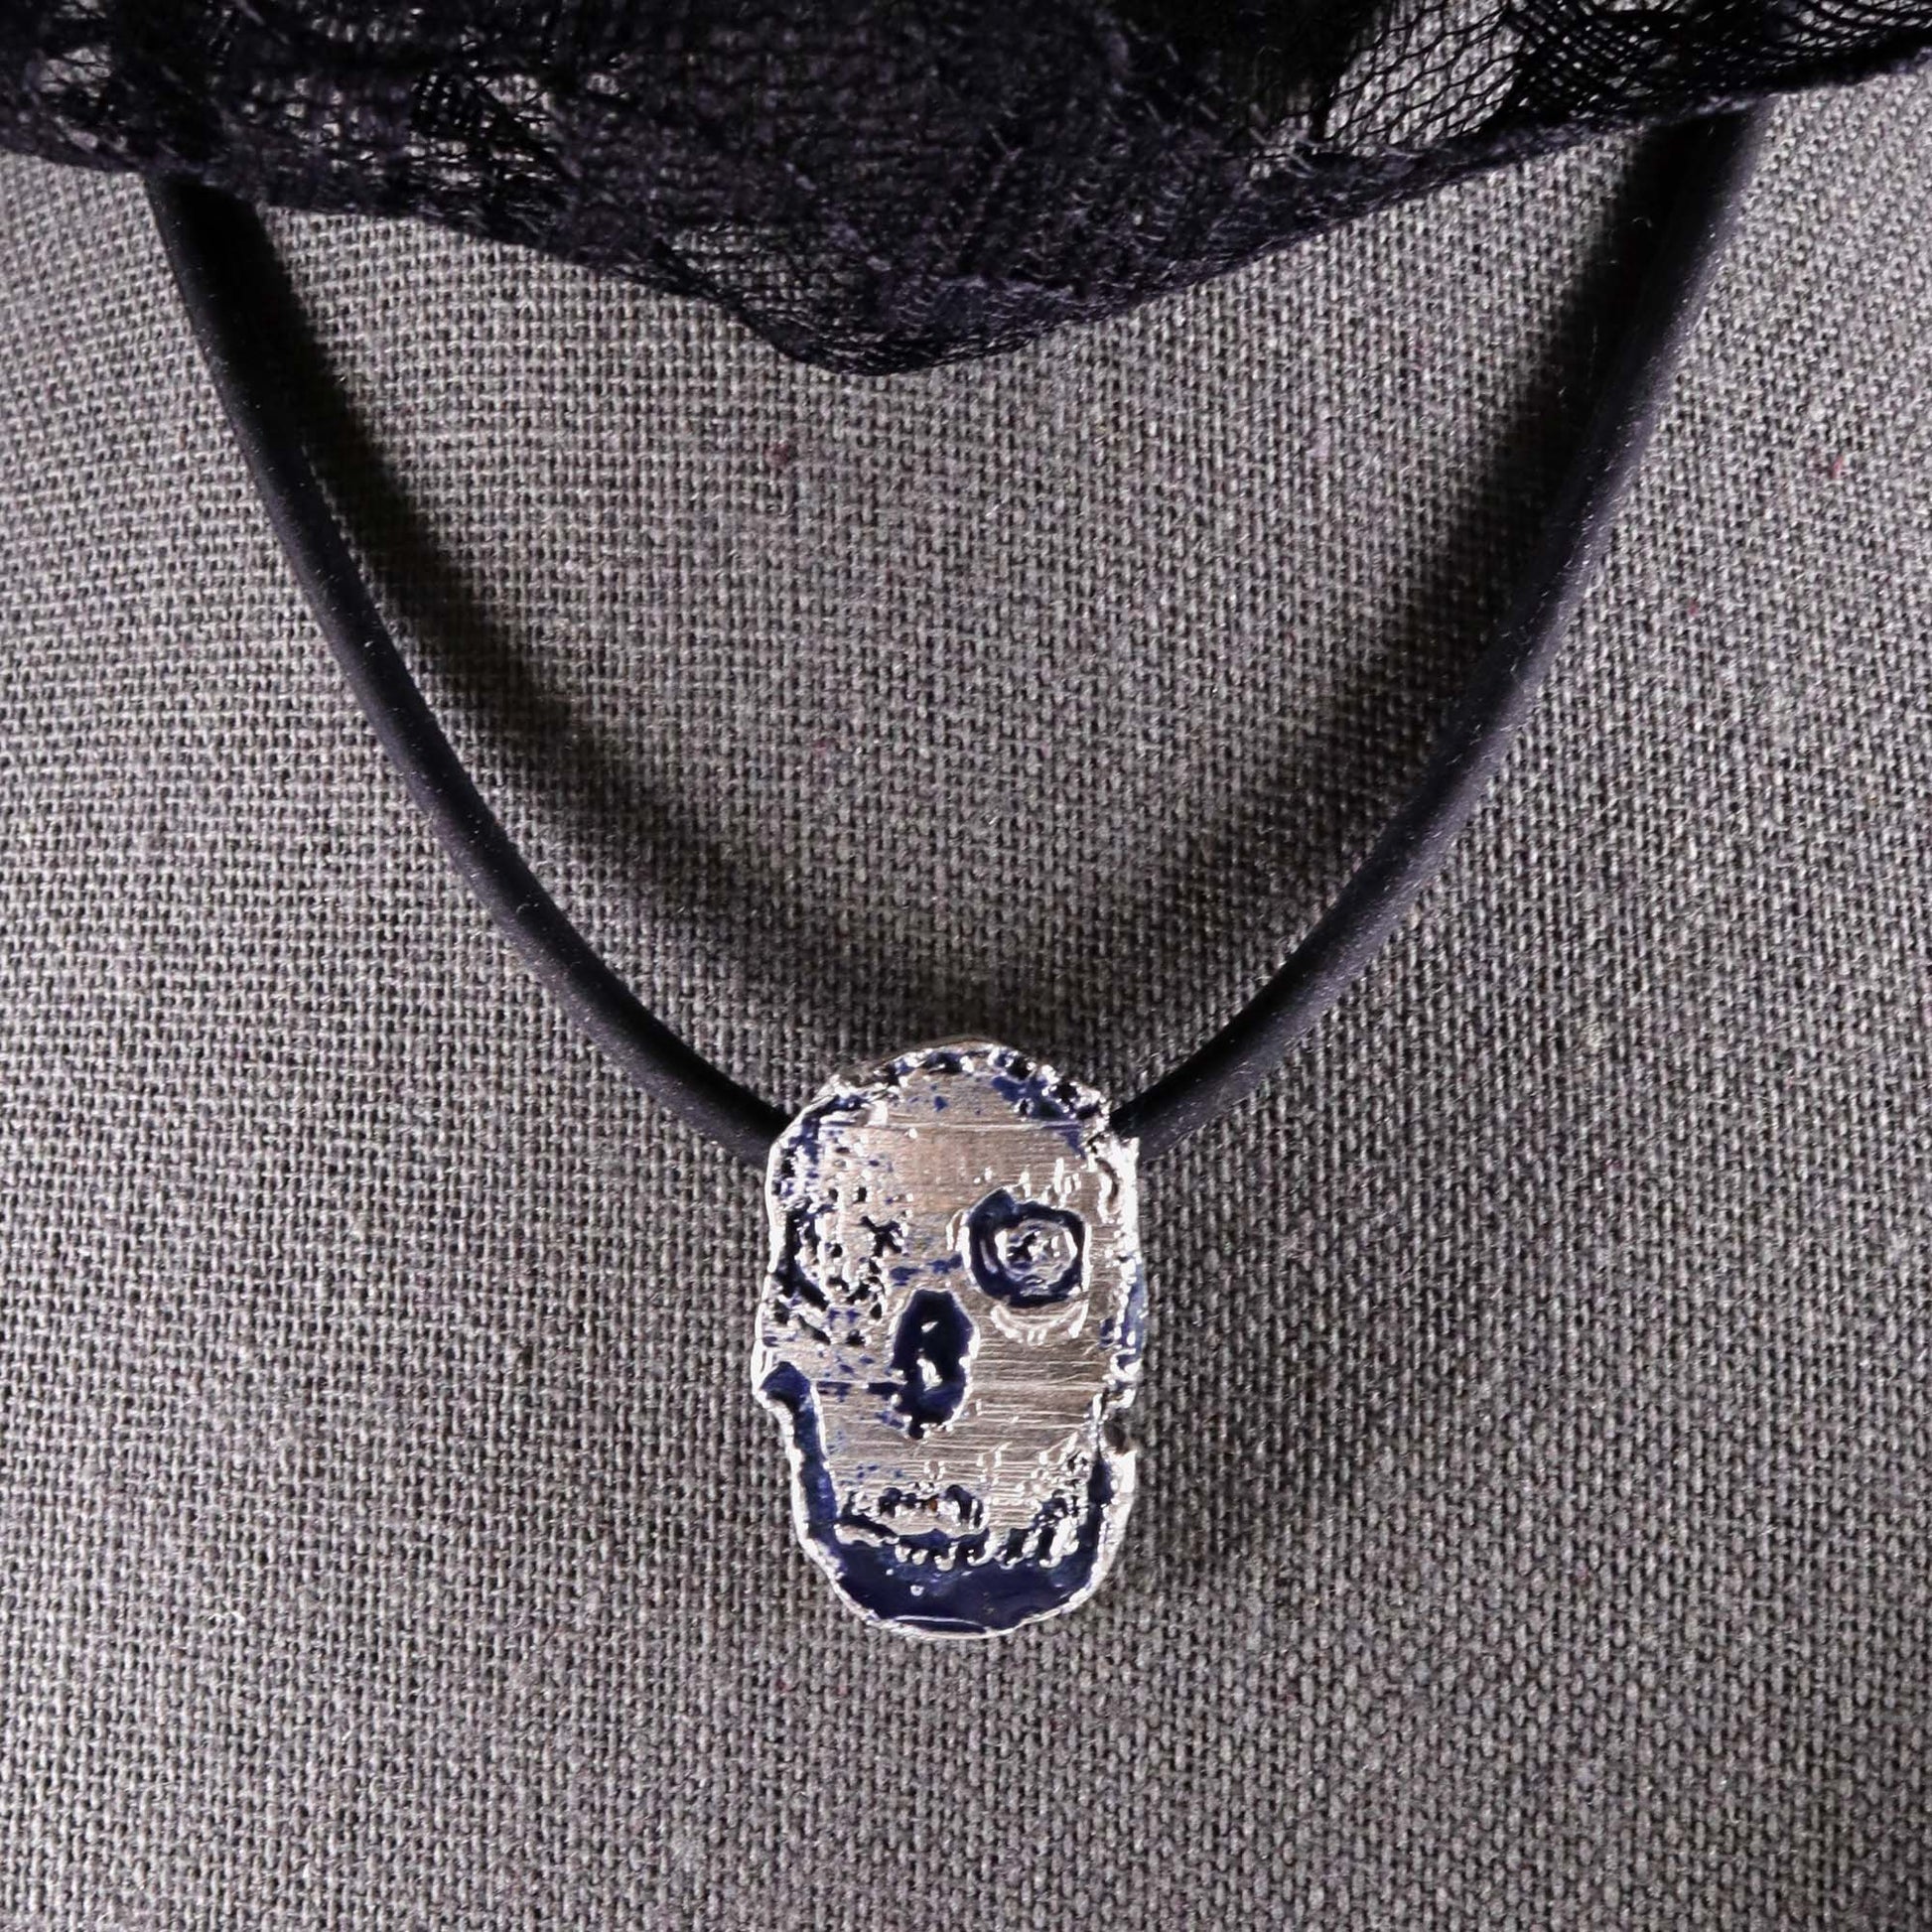 Freakazoid Skull Enameled Silver Pendant; Melasdesign Handmade Darkness; Susan Hicks jewelry